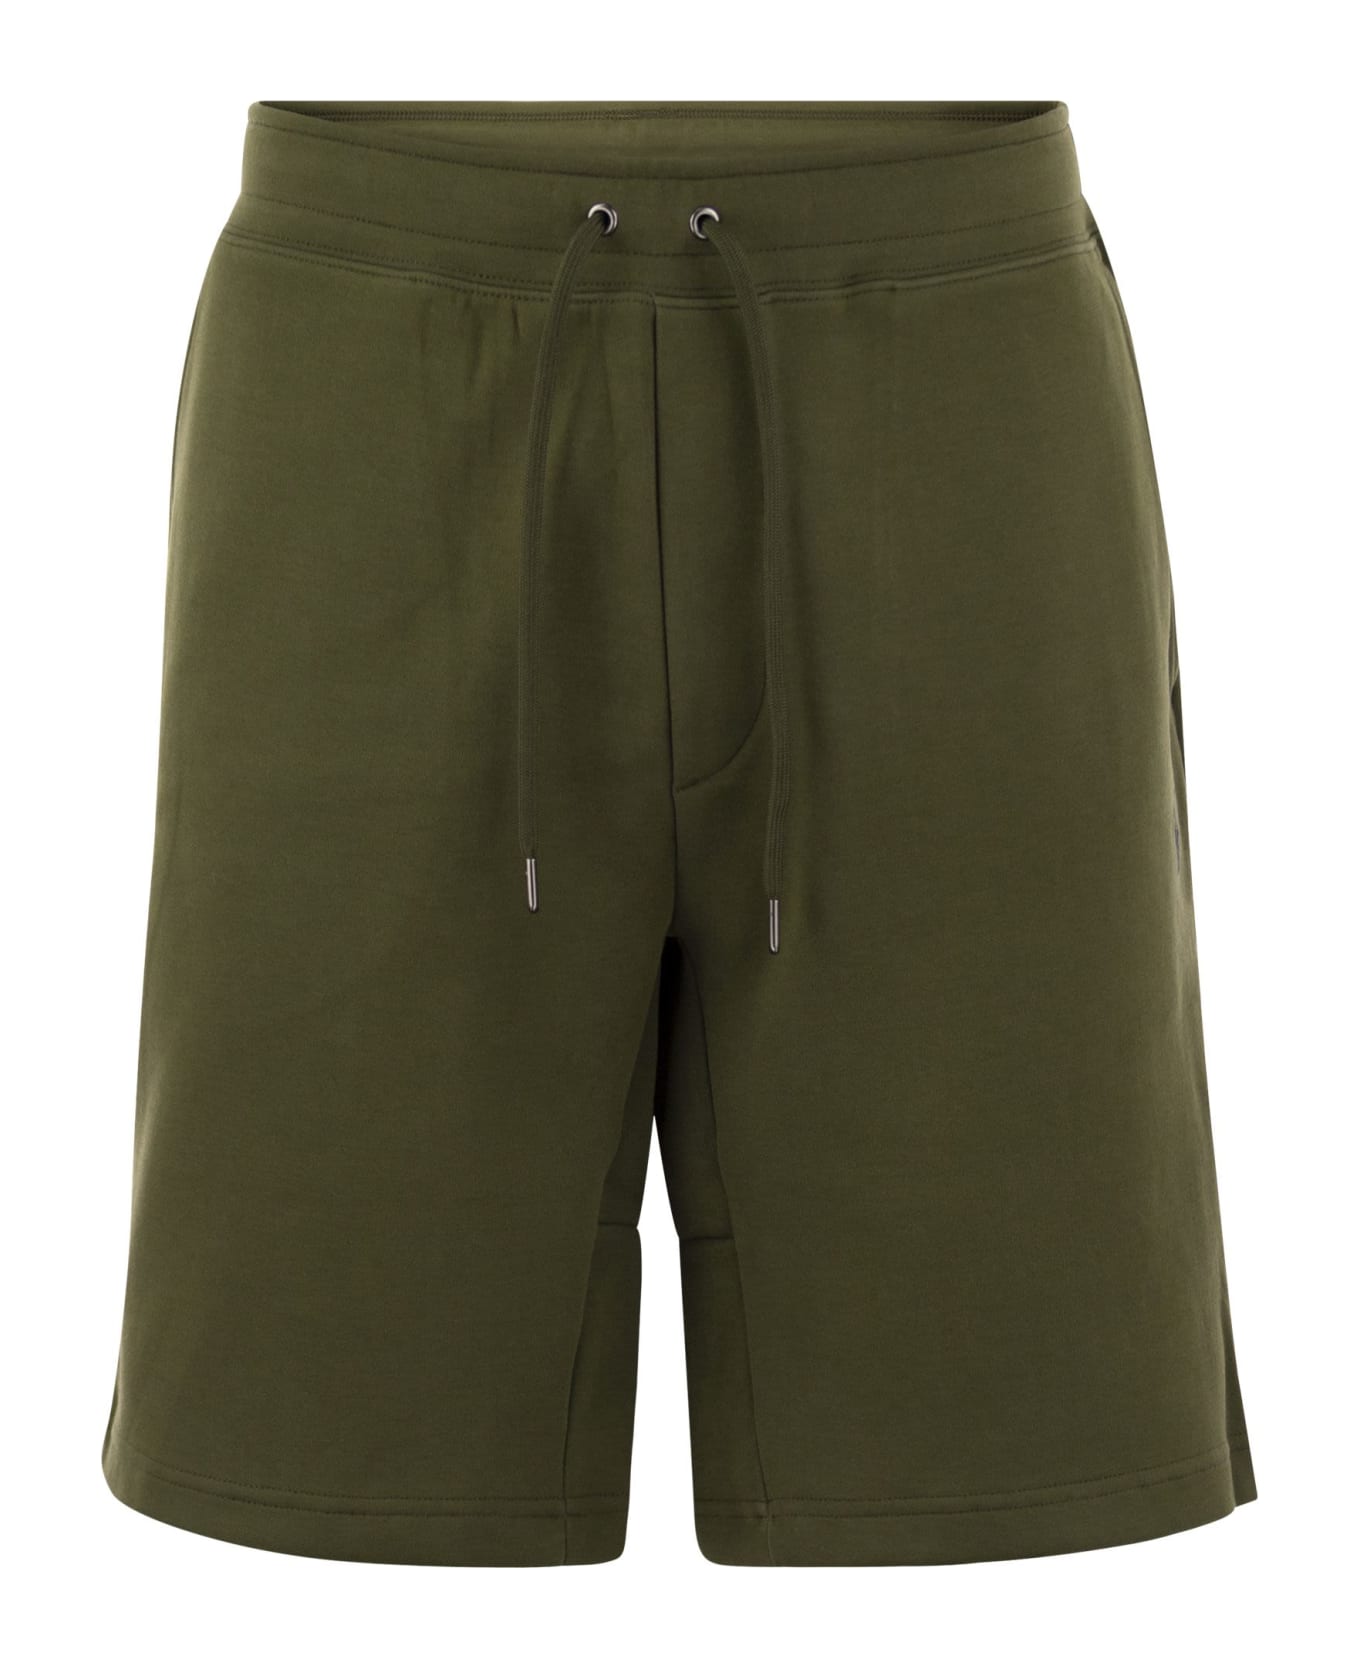 Polo Ralph Lauren Double-knit Shorts - Olive